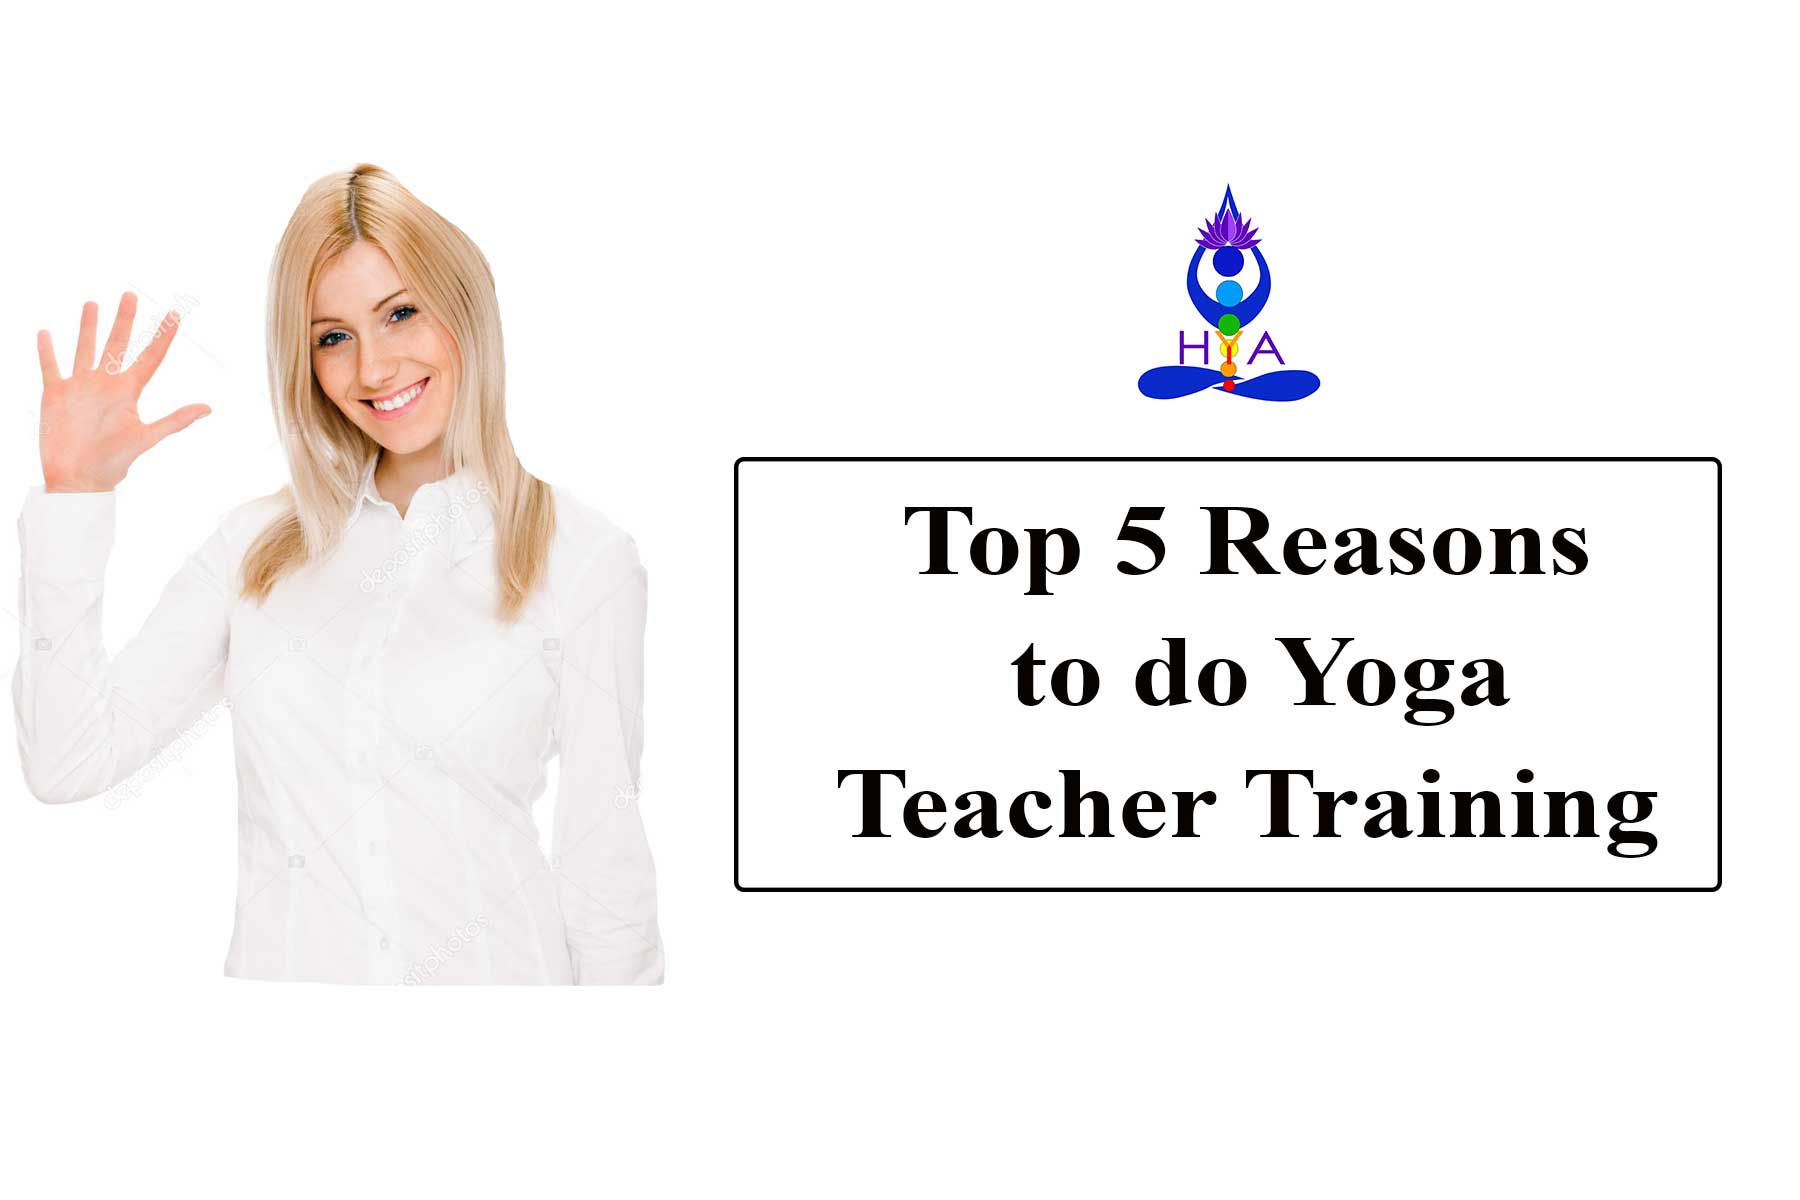 Top 5 Reasons to do Yoga Teacher Training